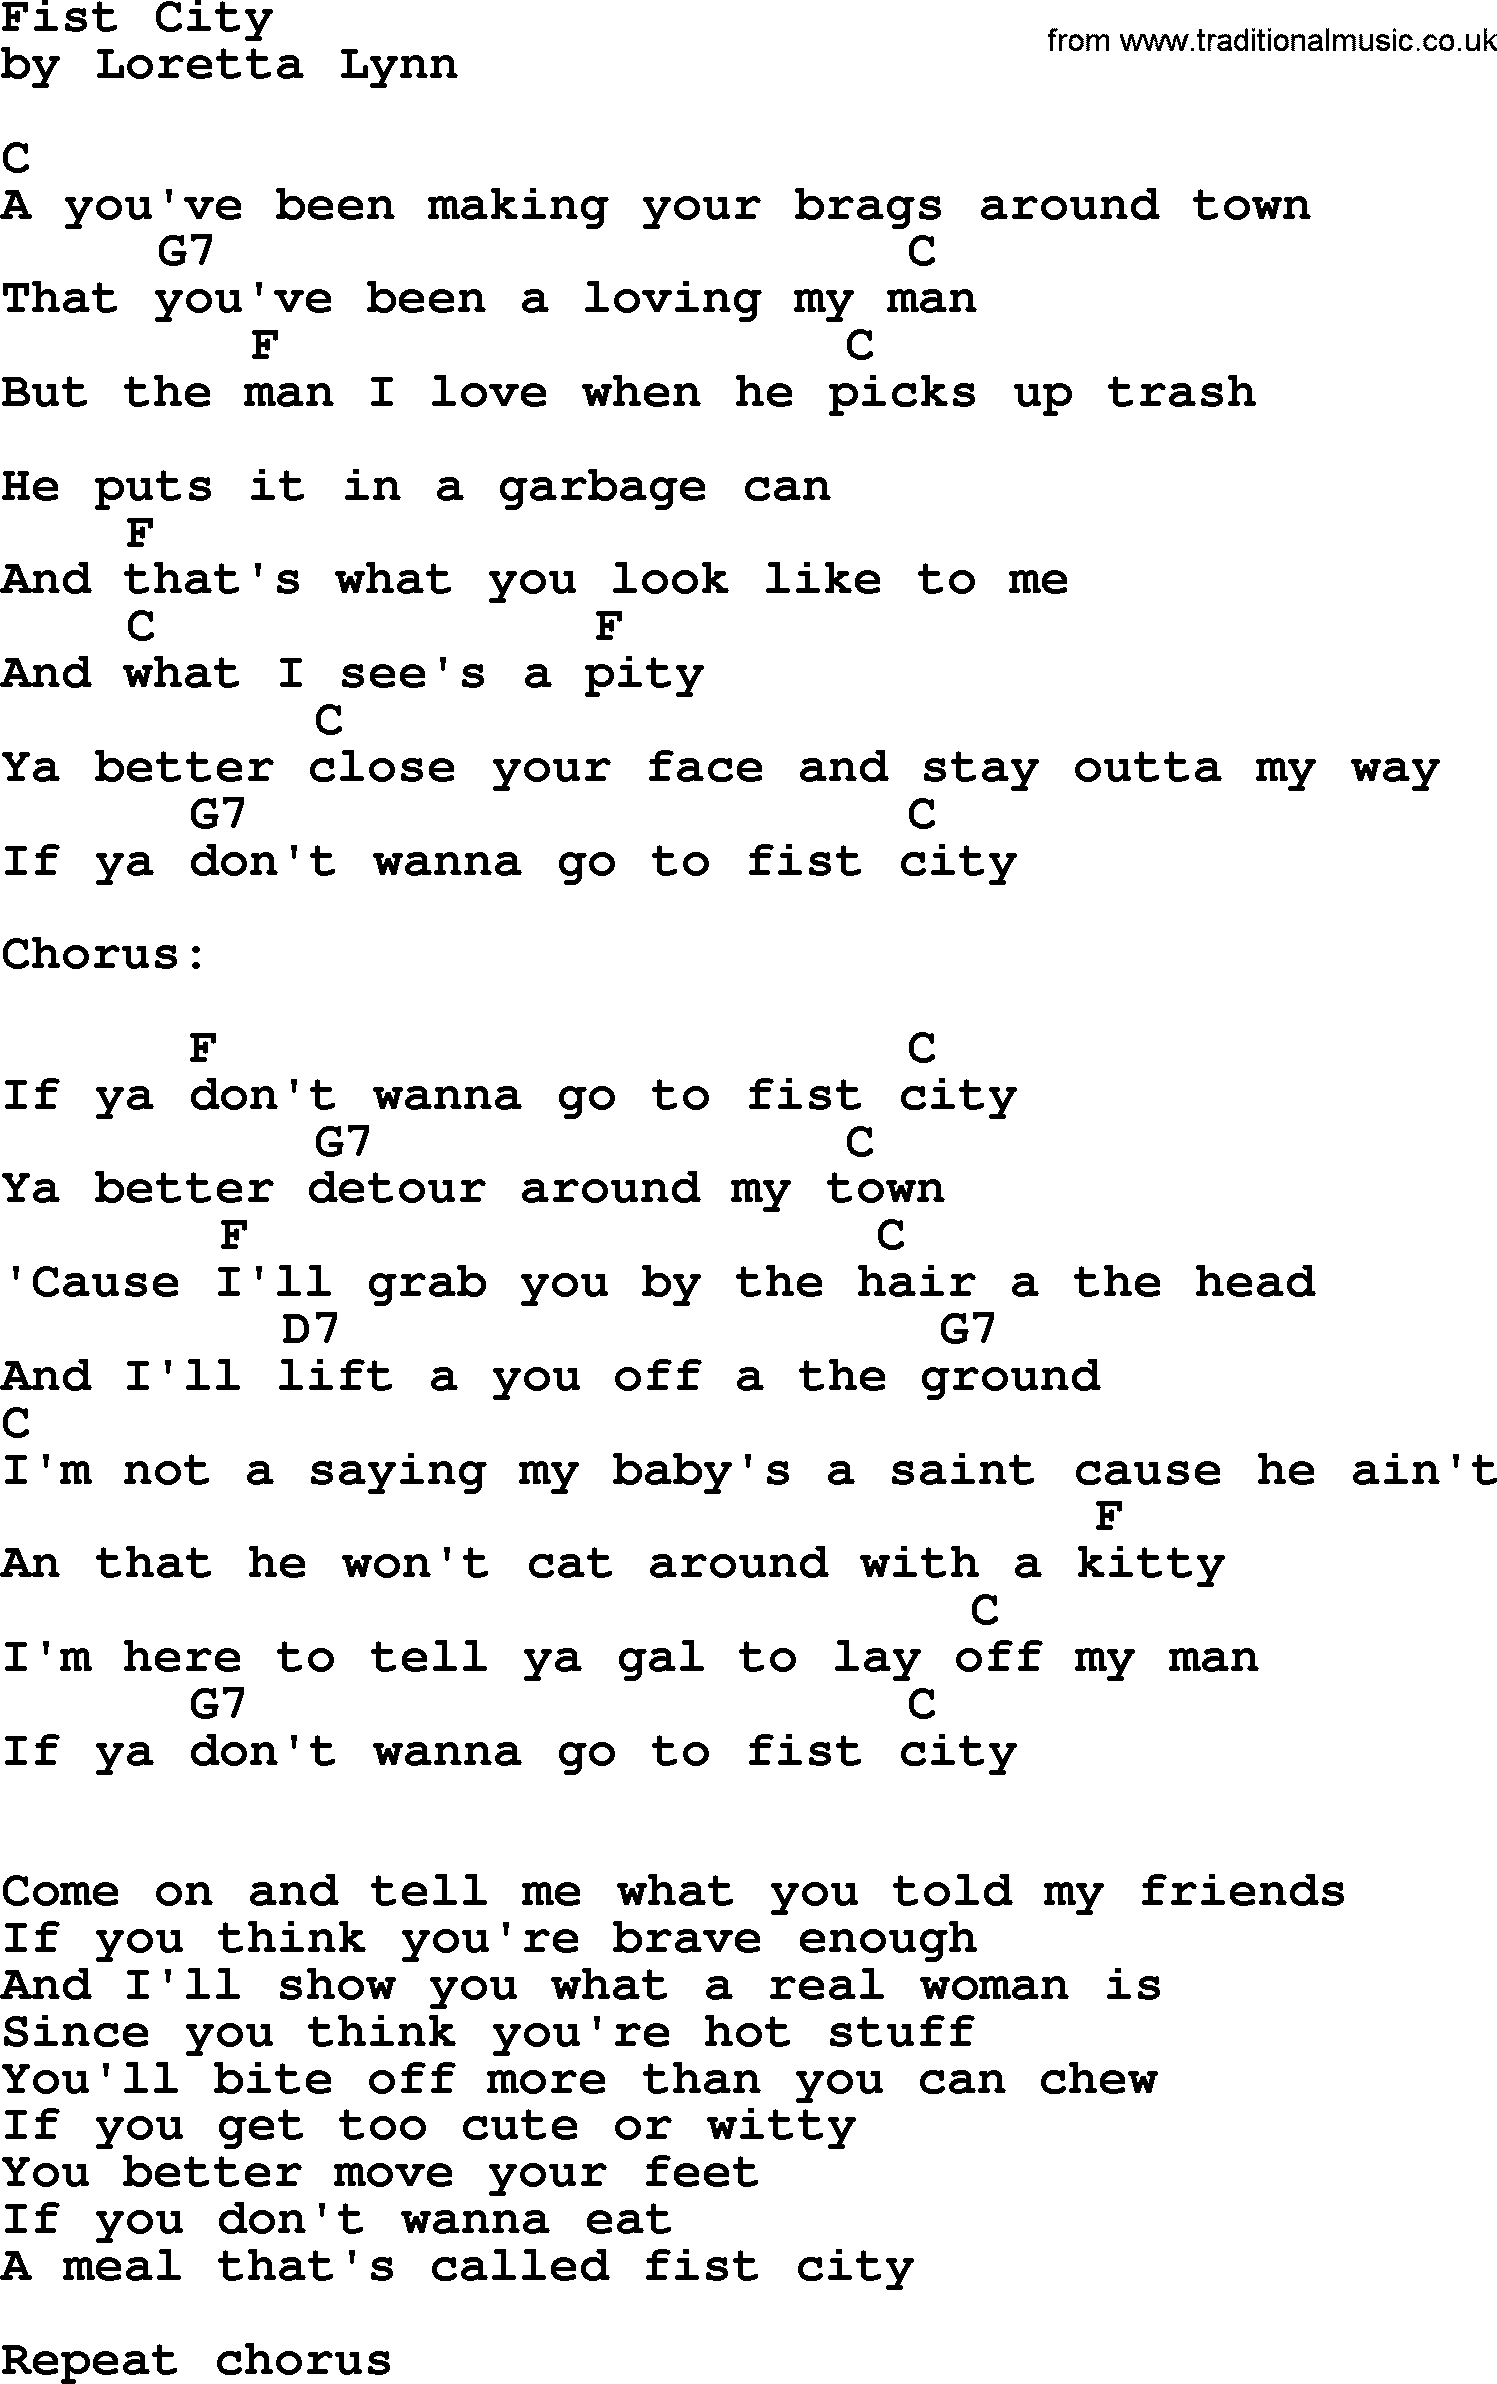 Loretta Lynn song: Fist City lyrics and chords